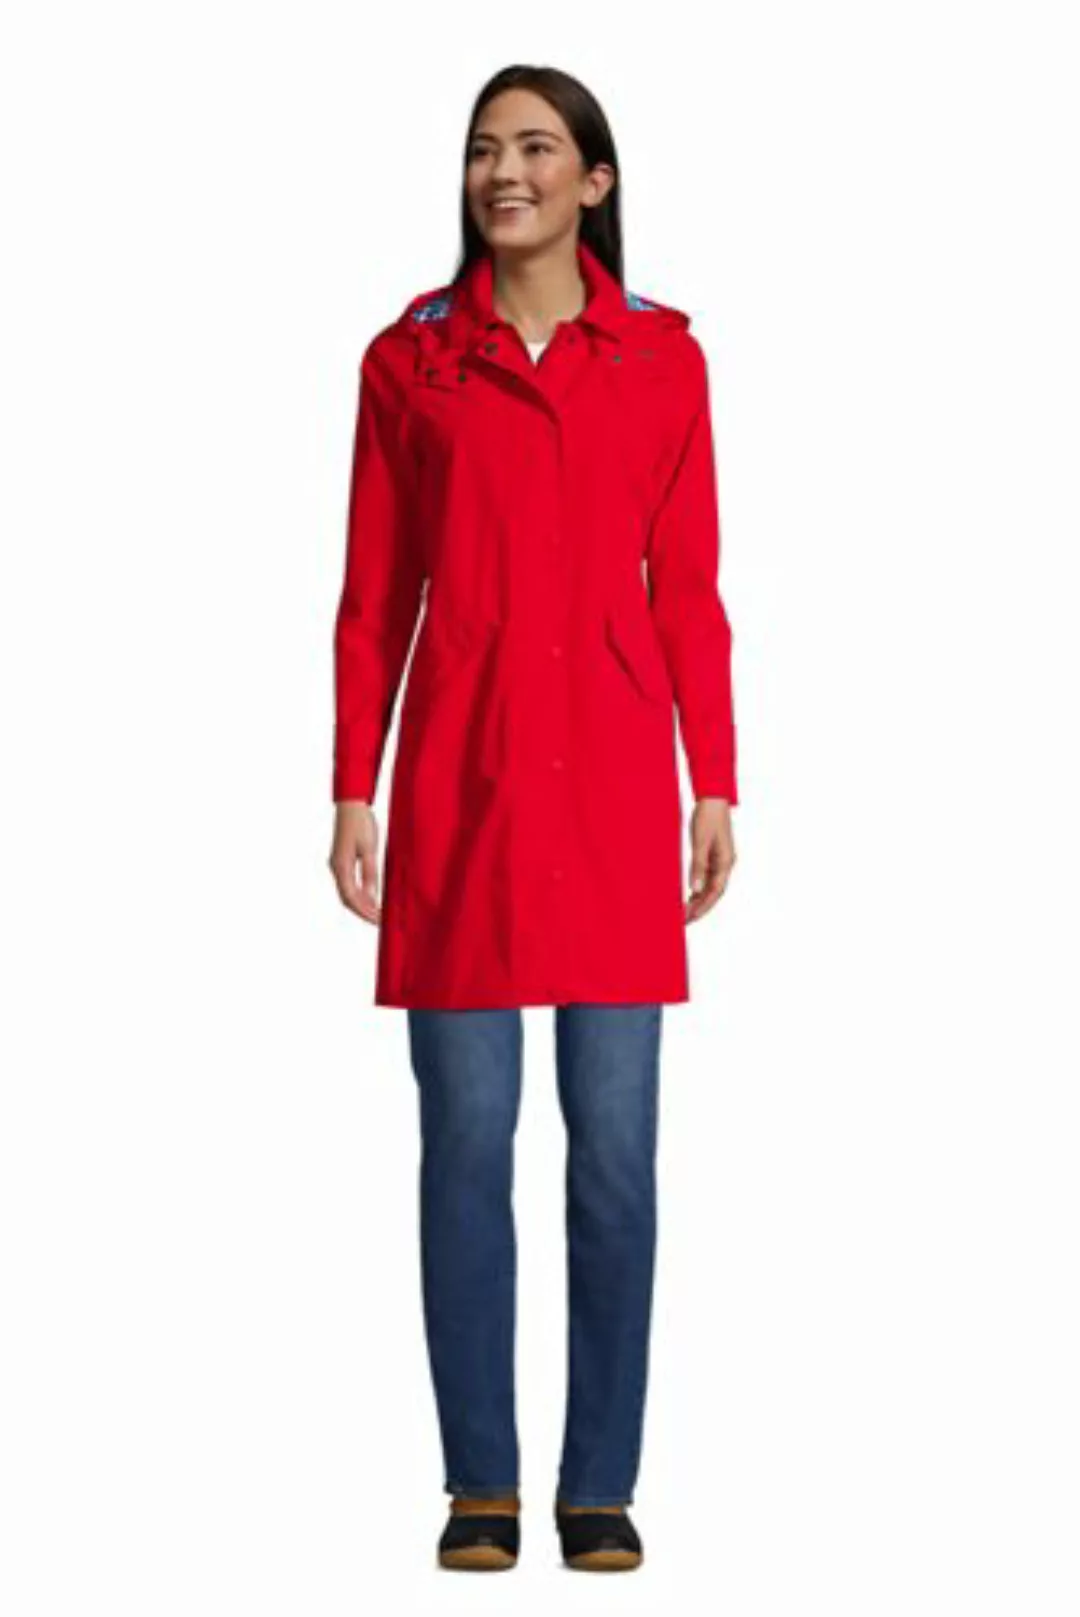 Regenmantel mit Kapuze, Damen, Größe: L Normal, Rot, Polyester, by Lands' E günstig online kaufen